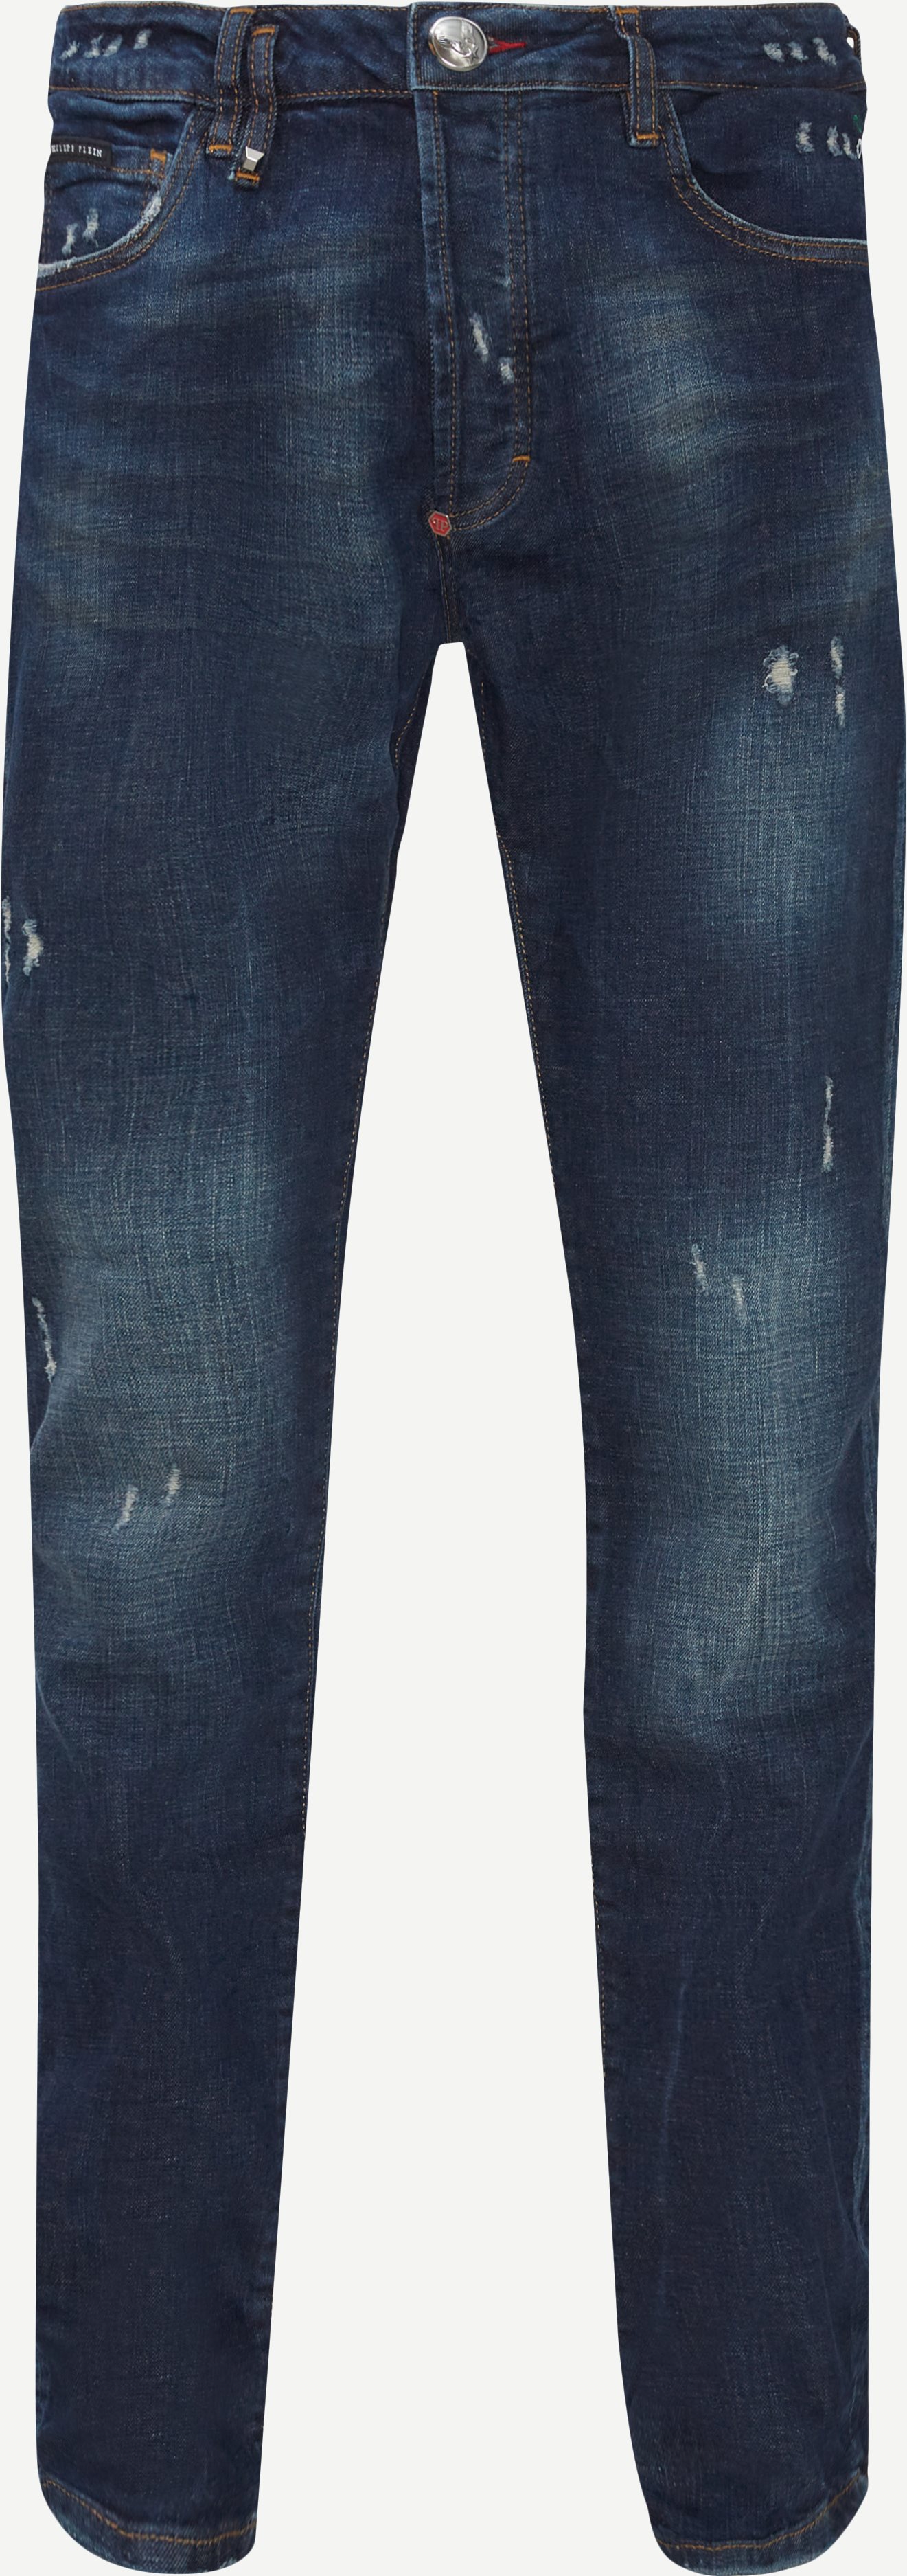 Jeans - Straight fit - Denim